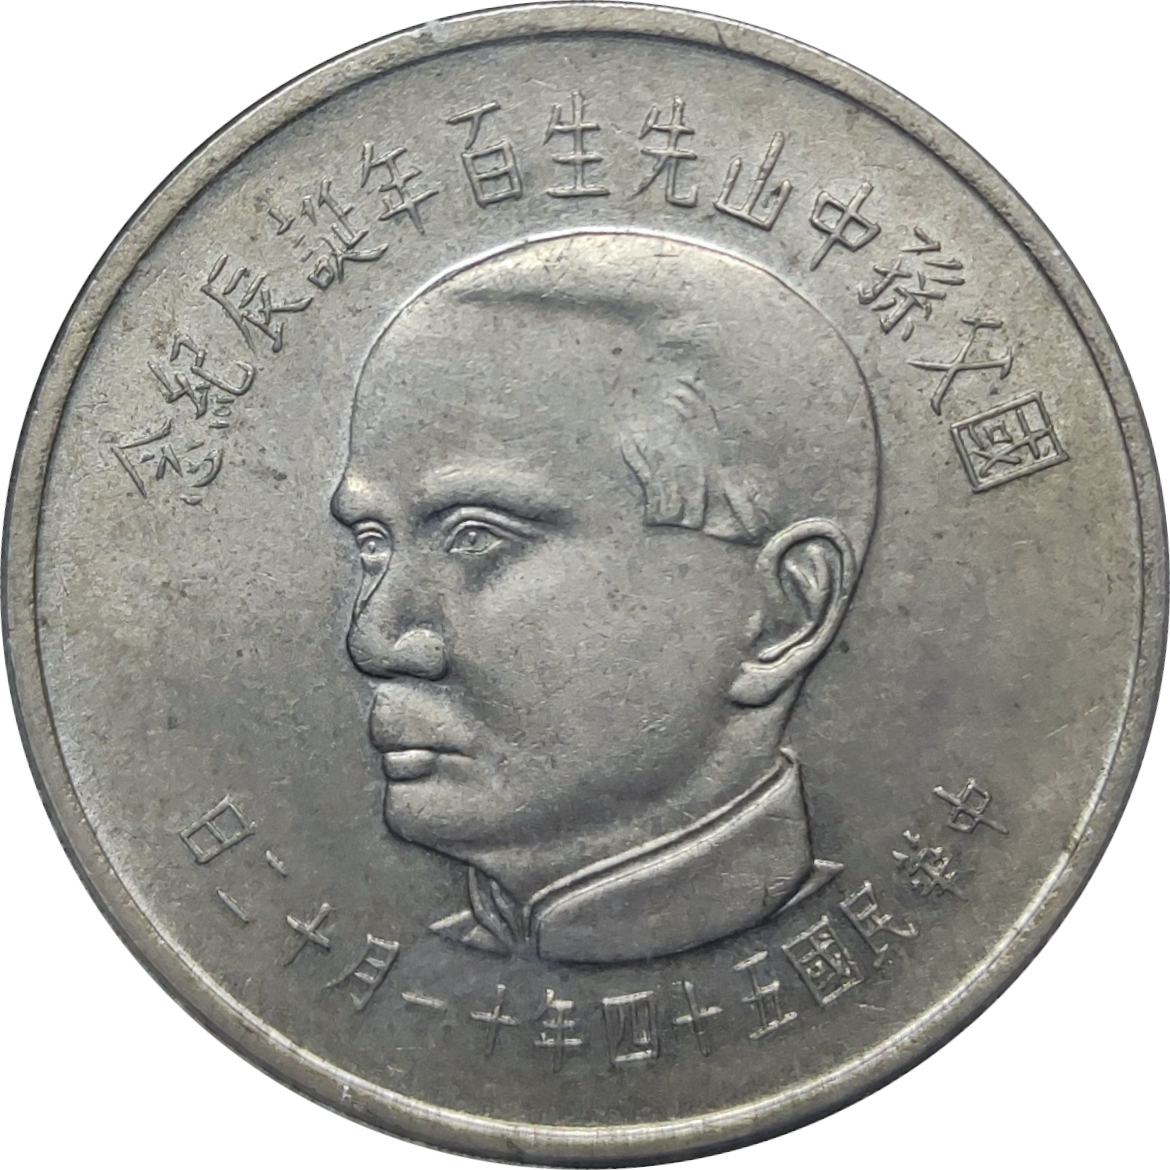 5 yuan - Sun Yat-Sen - 100 years